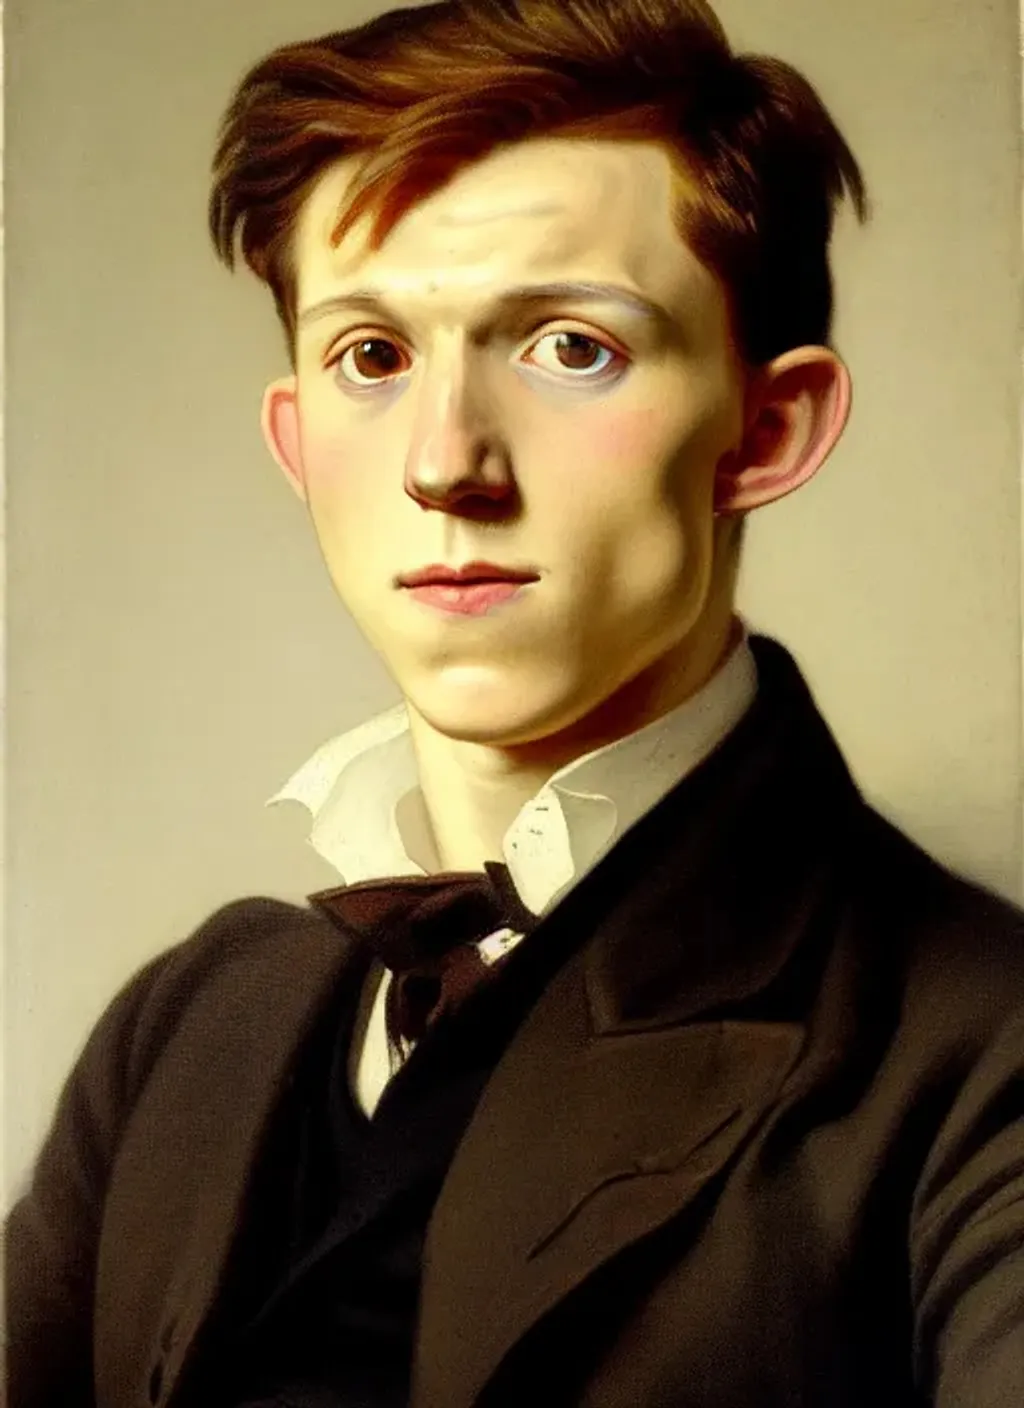 Prompt: Portrait of Tom Holland by Adolf Hirémy-Hirschl